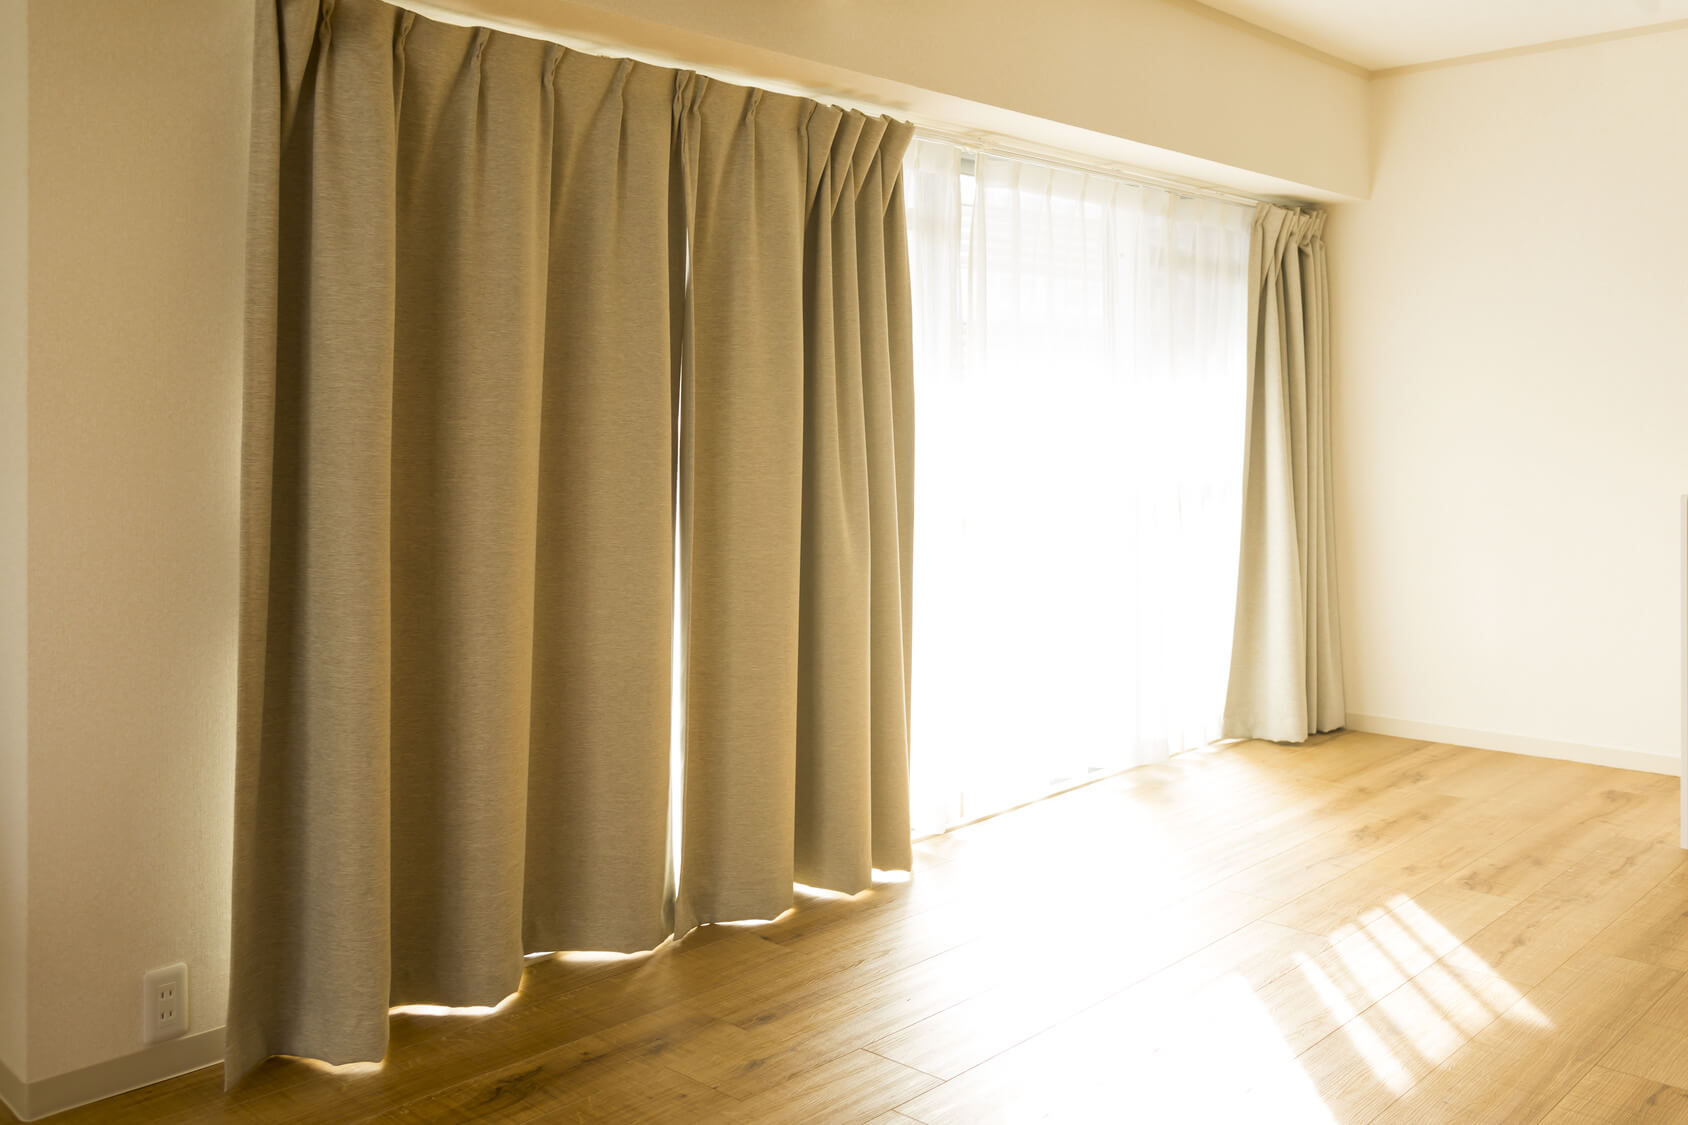 Fabric Curtains